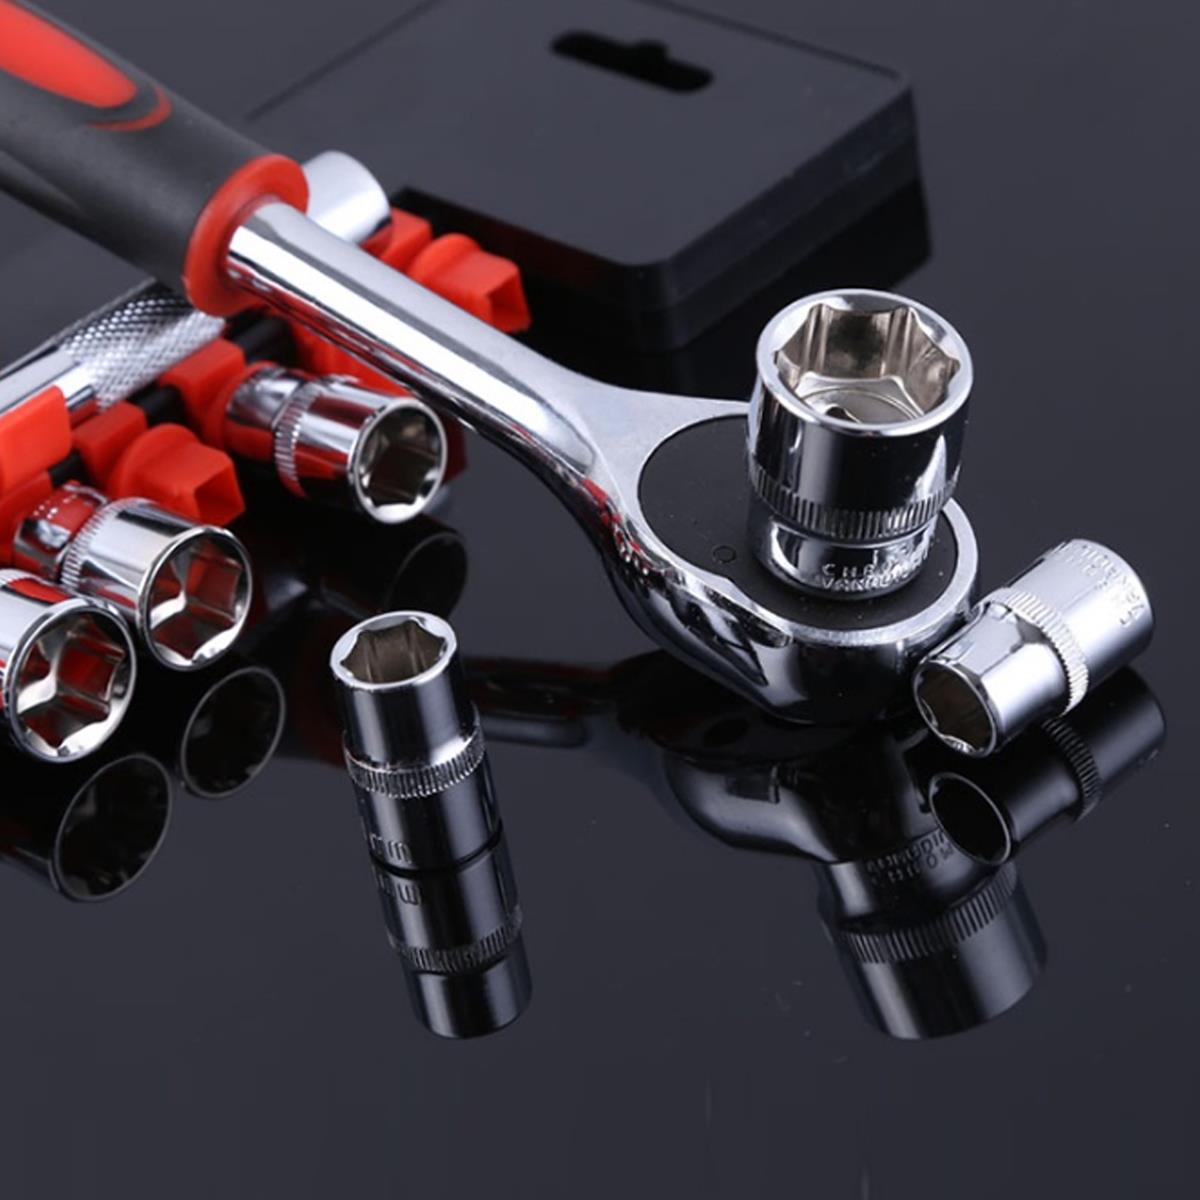 28Pcs-14inch-Ratchet-Wrench-Socket-Set-Hardware-Vanadium-Repairing-Kit-Hand-Tools-1262802